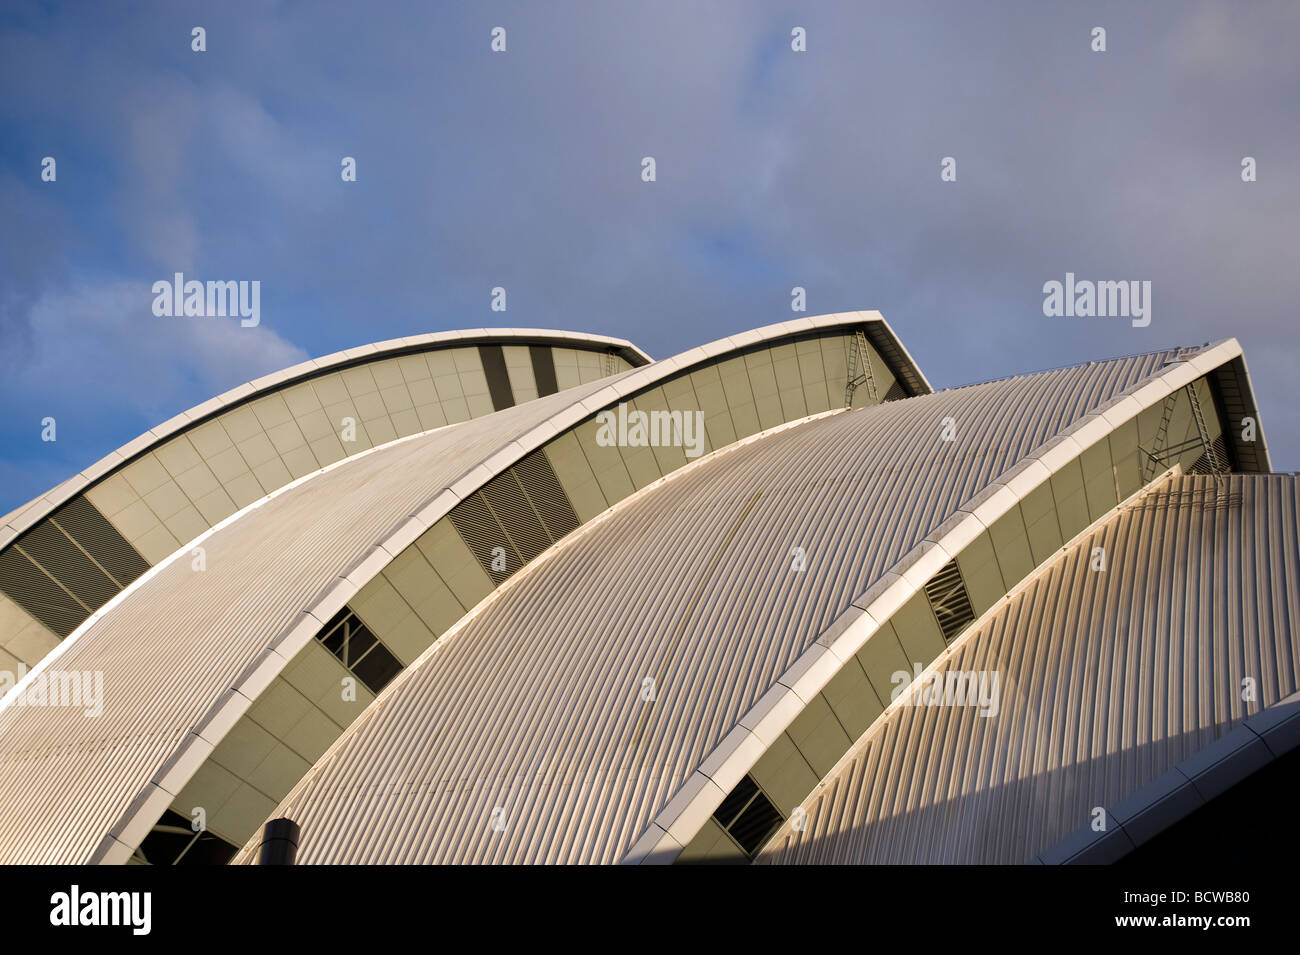 Clyde Auditorium, Glasgow, Scotland, United Kingdom, Europe Stock Photo